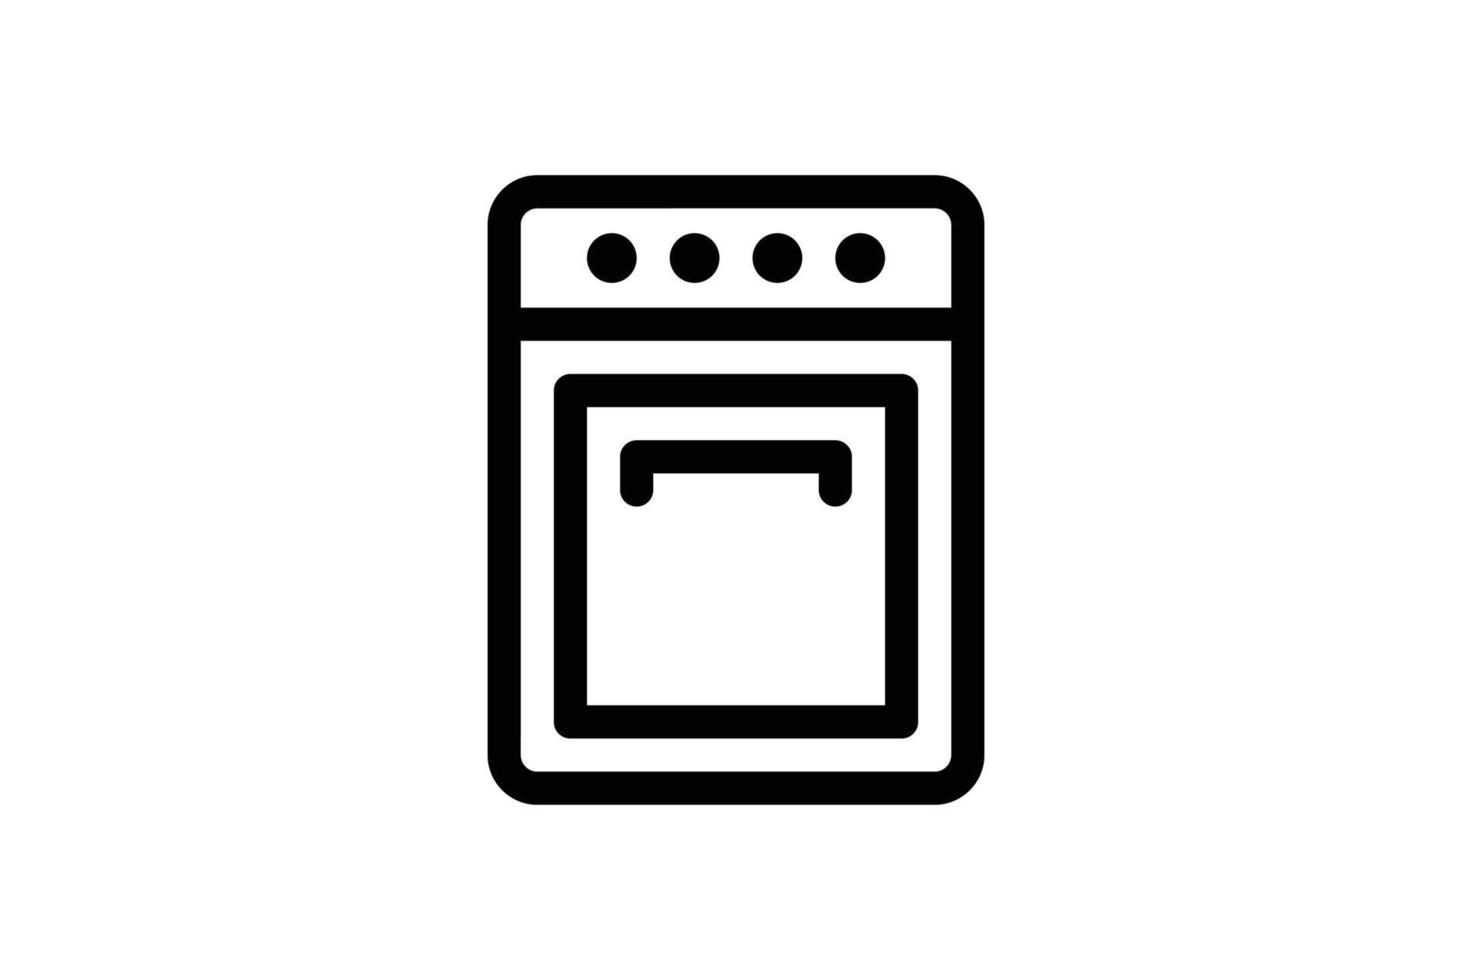 icono de estufa de horno estilo de línea de cocina gratis vector